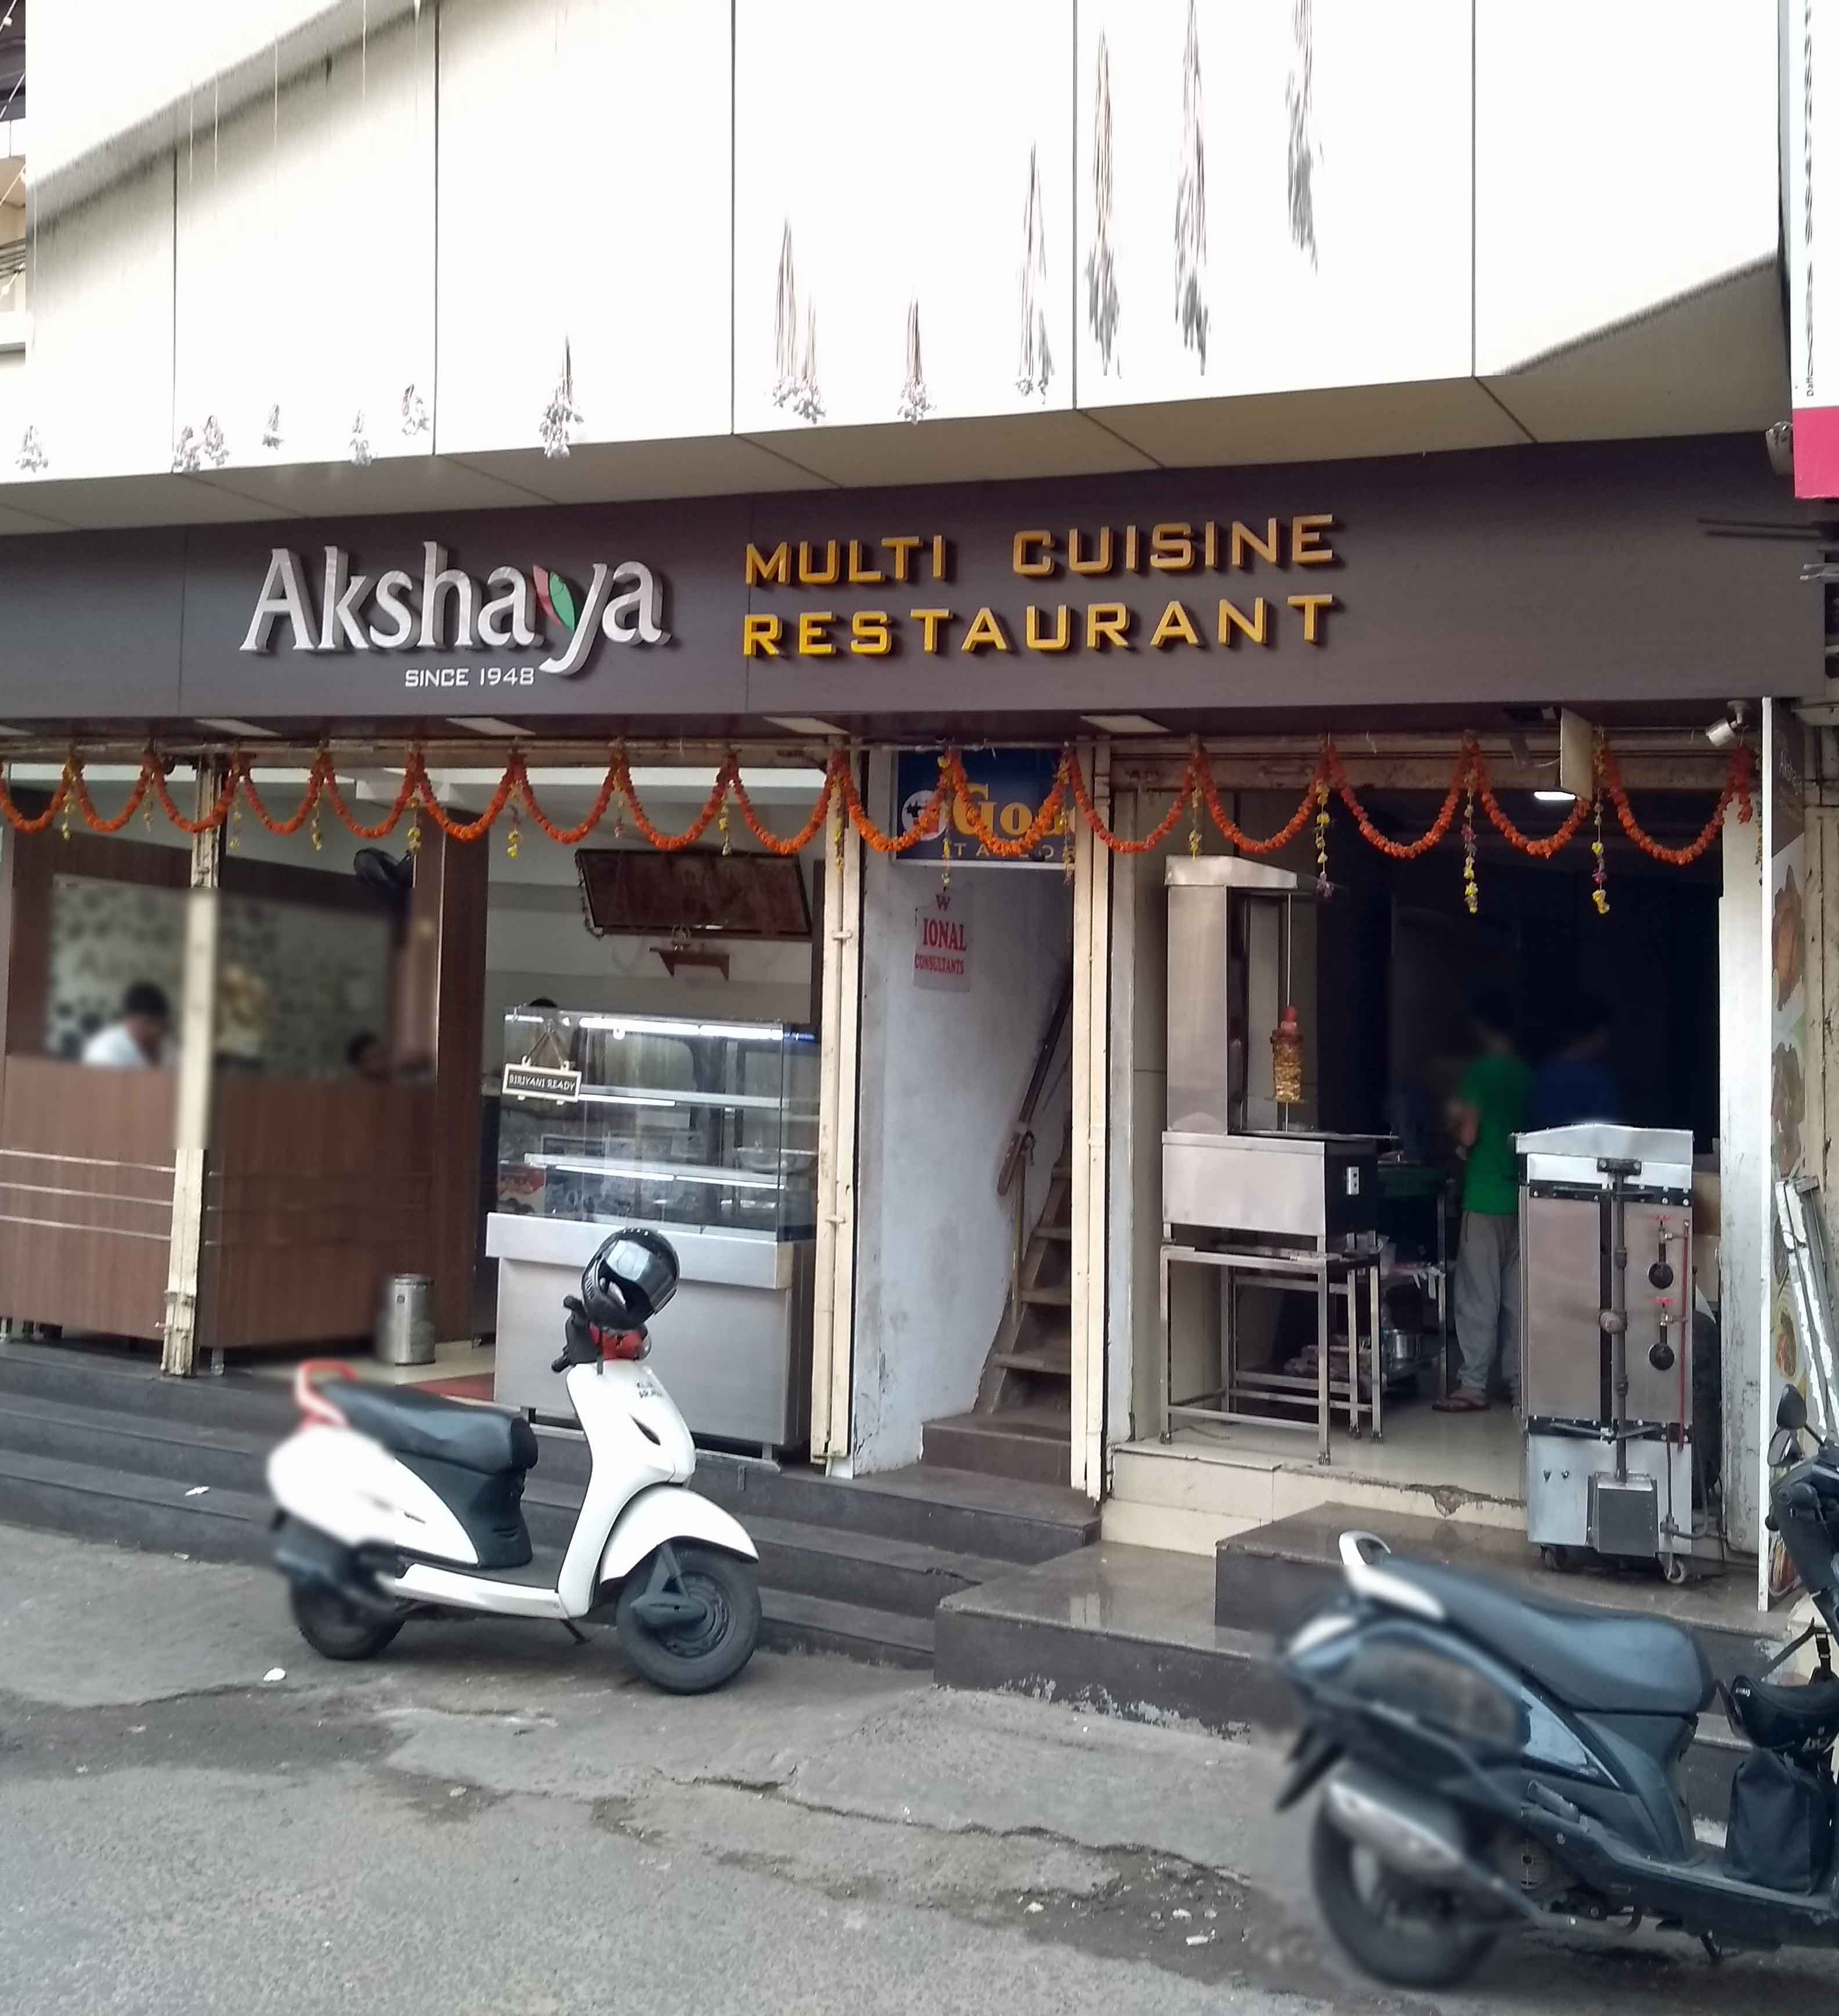 Reviews of Akshaya Multicuisine Restaurant, Poothole, Thrissur | Zomato